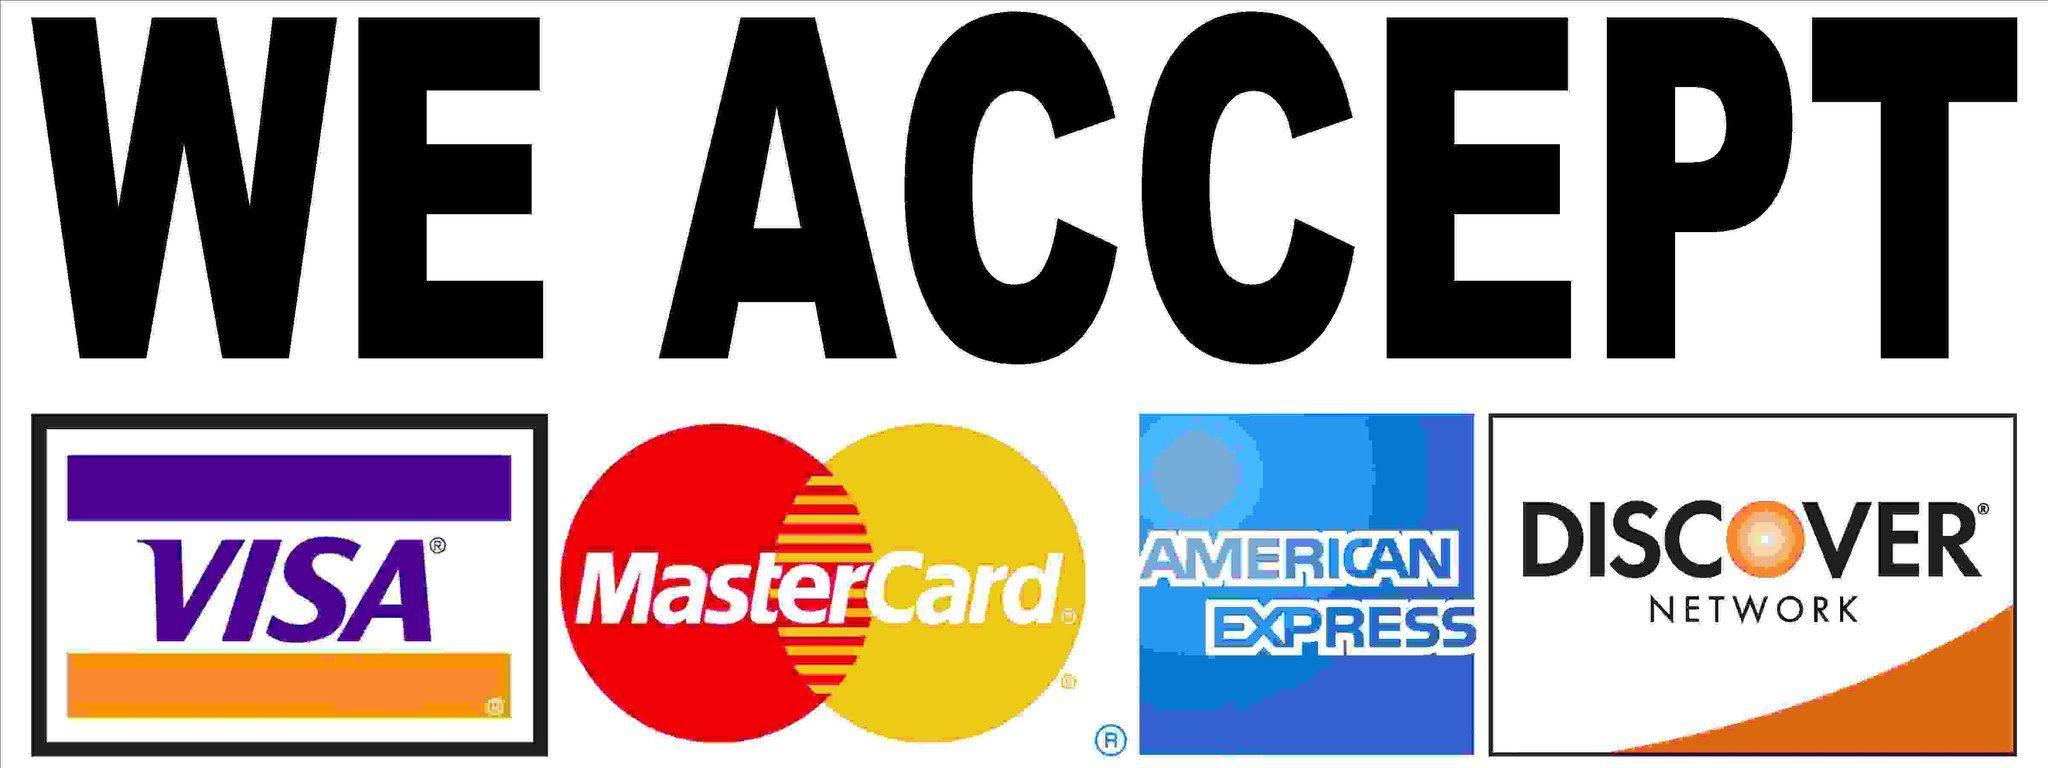 American Express Visa MasterCard Logo - We Accept Visa Mastercard American Express Discover Card Sign ...